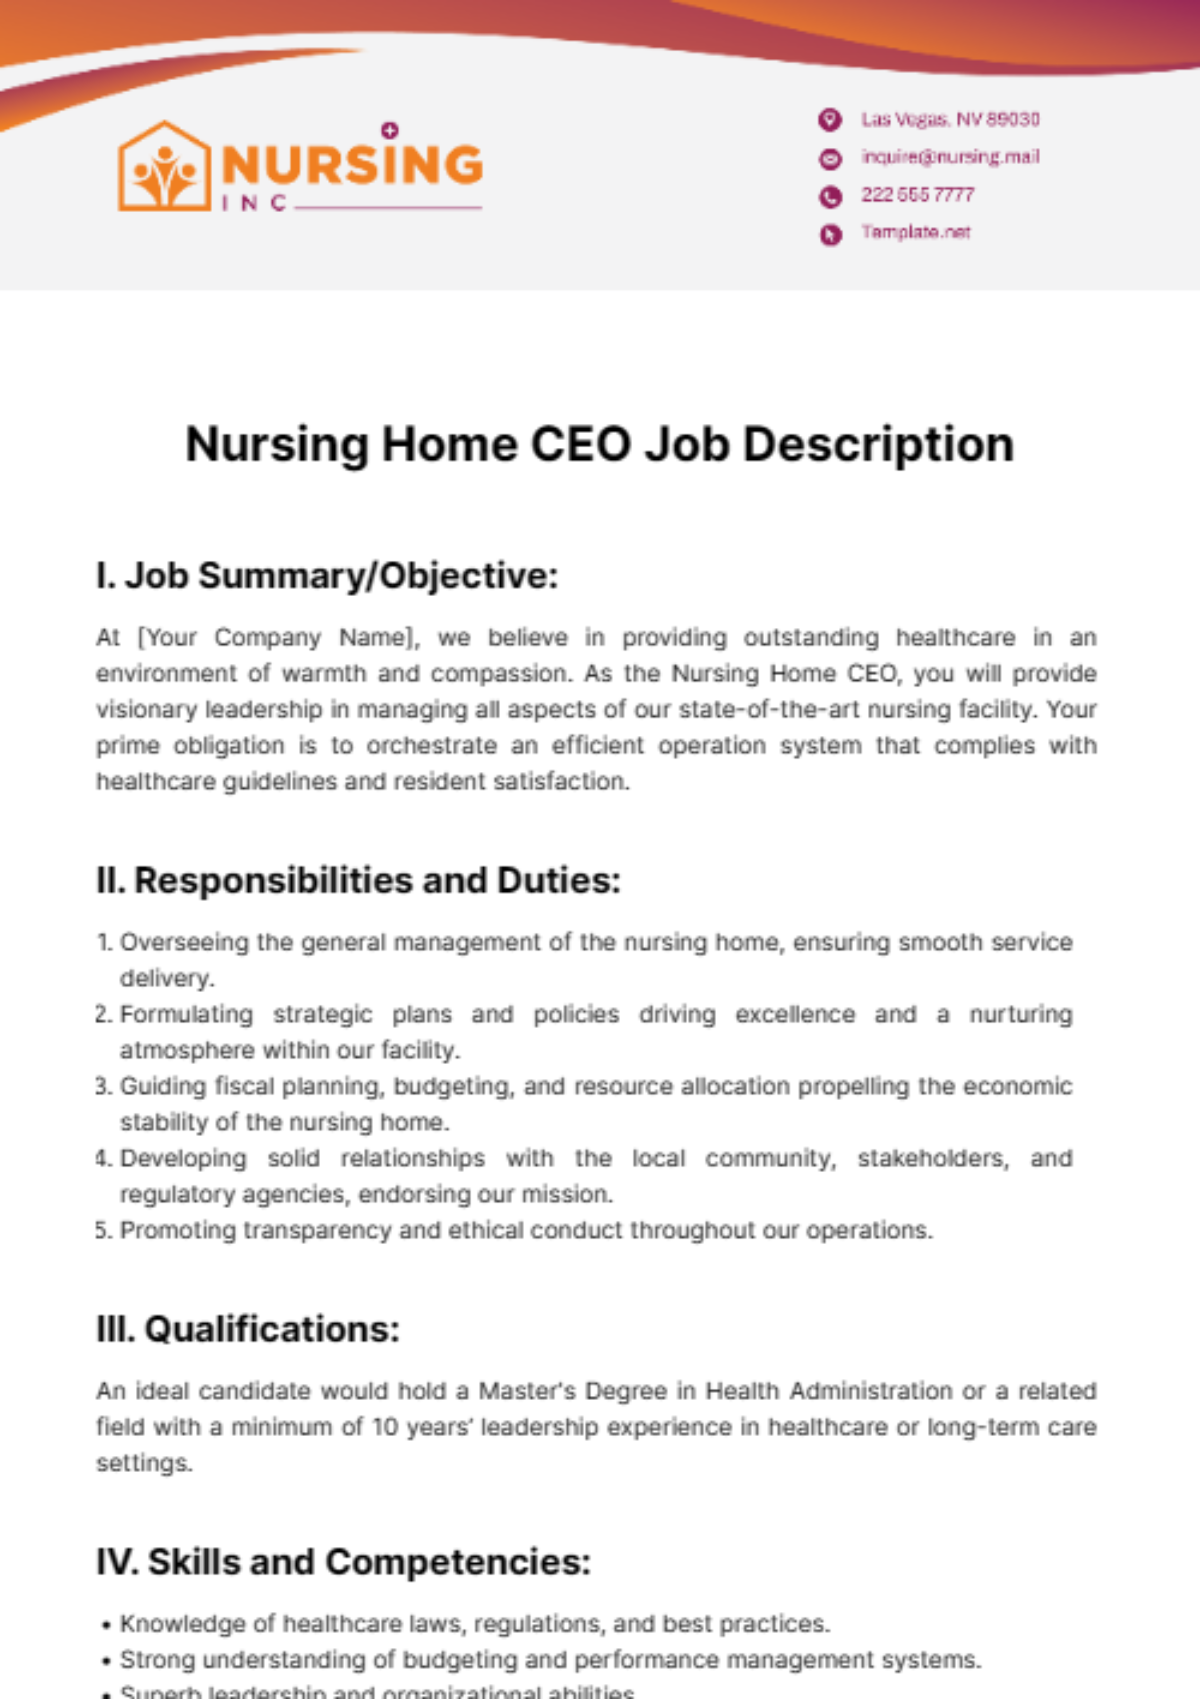 Nursing Home CEO Job Description Template